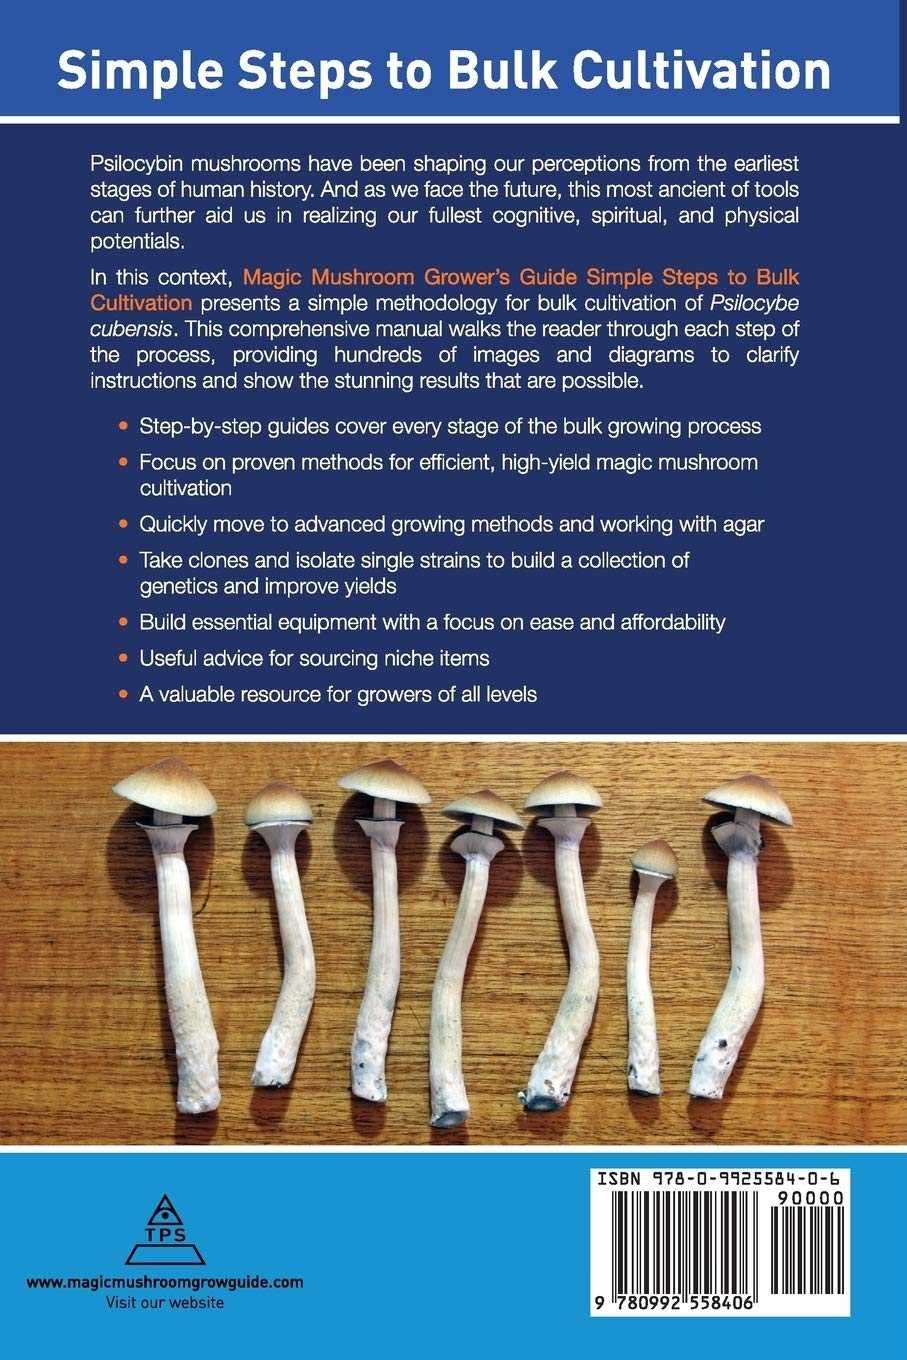 Книга "Magic Mushroom Grower's Guide Simple Steps to Bulk Cultivation"